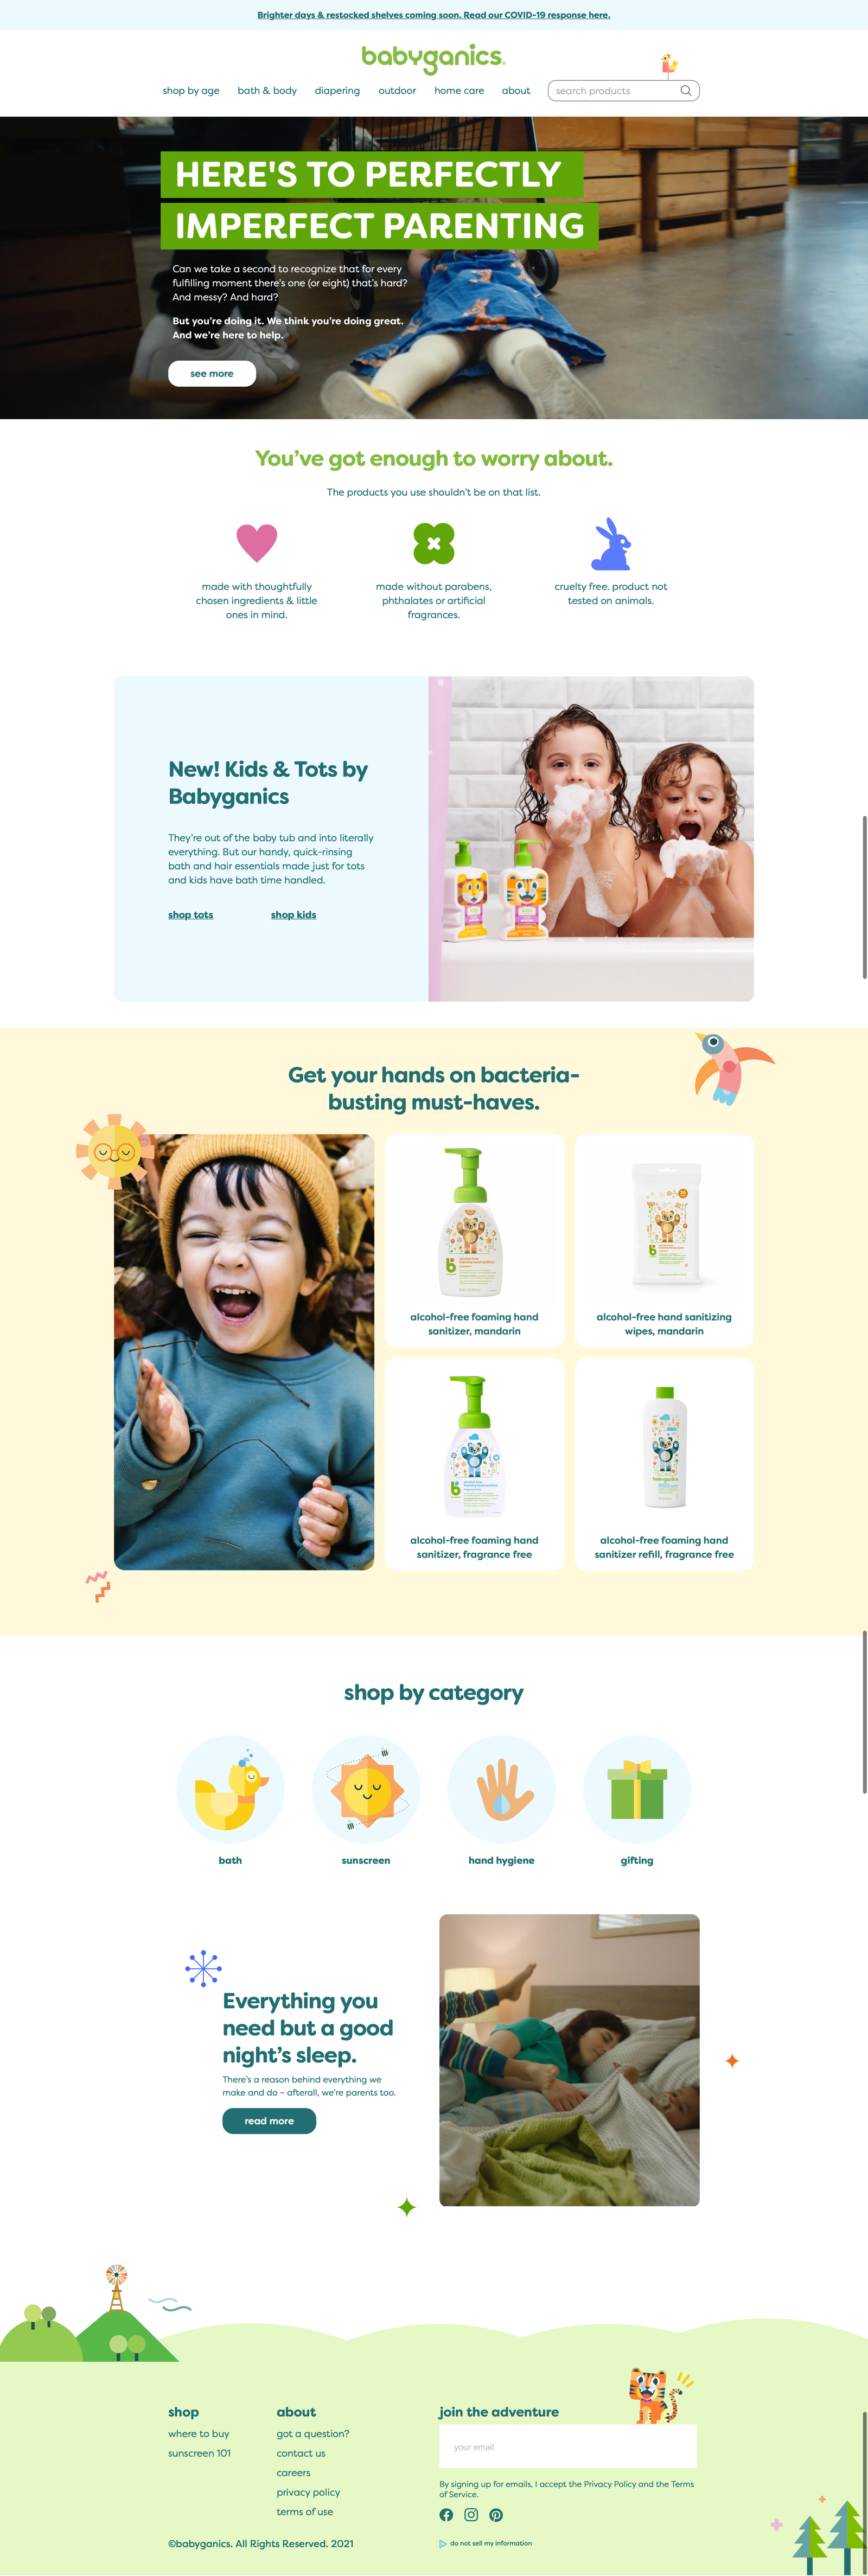 babyganics homepage